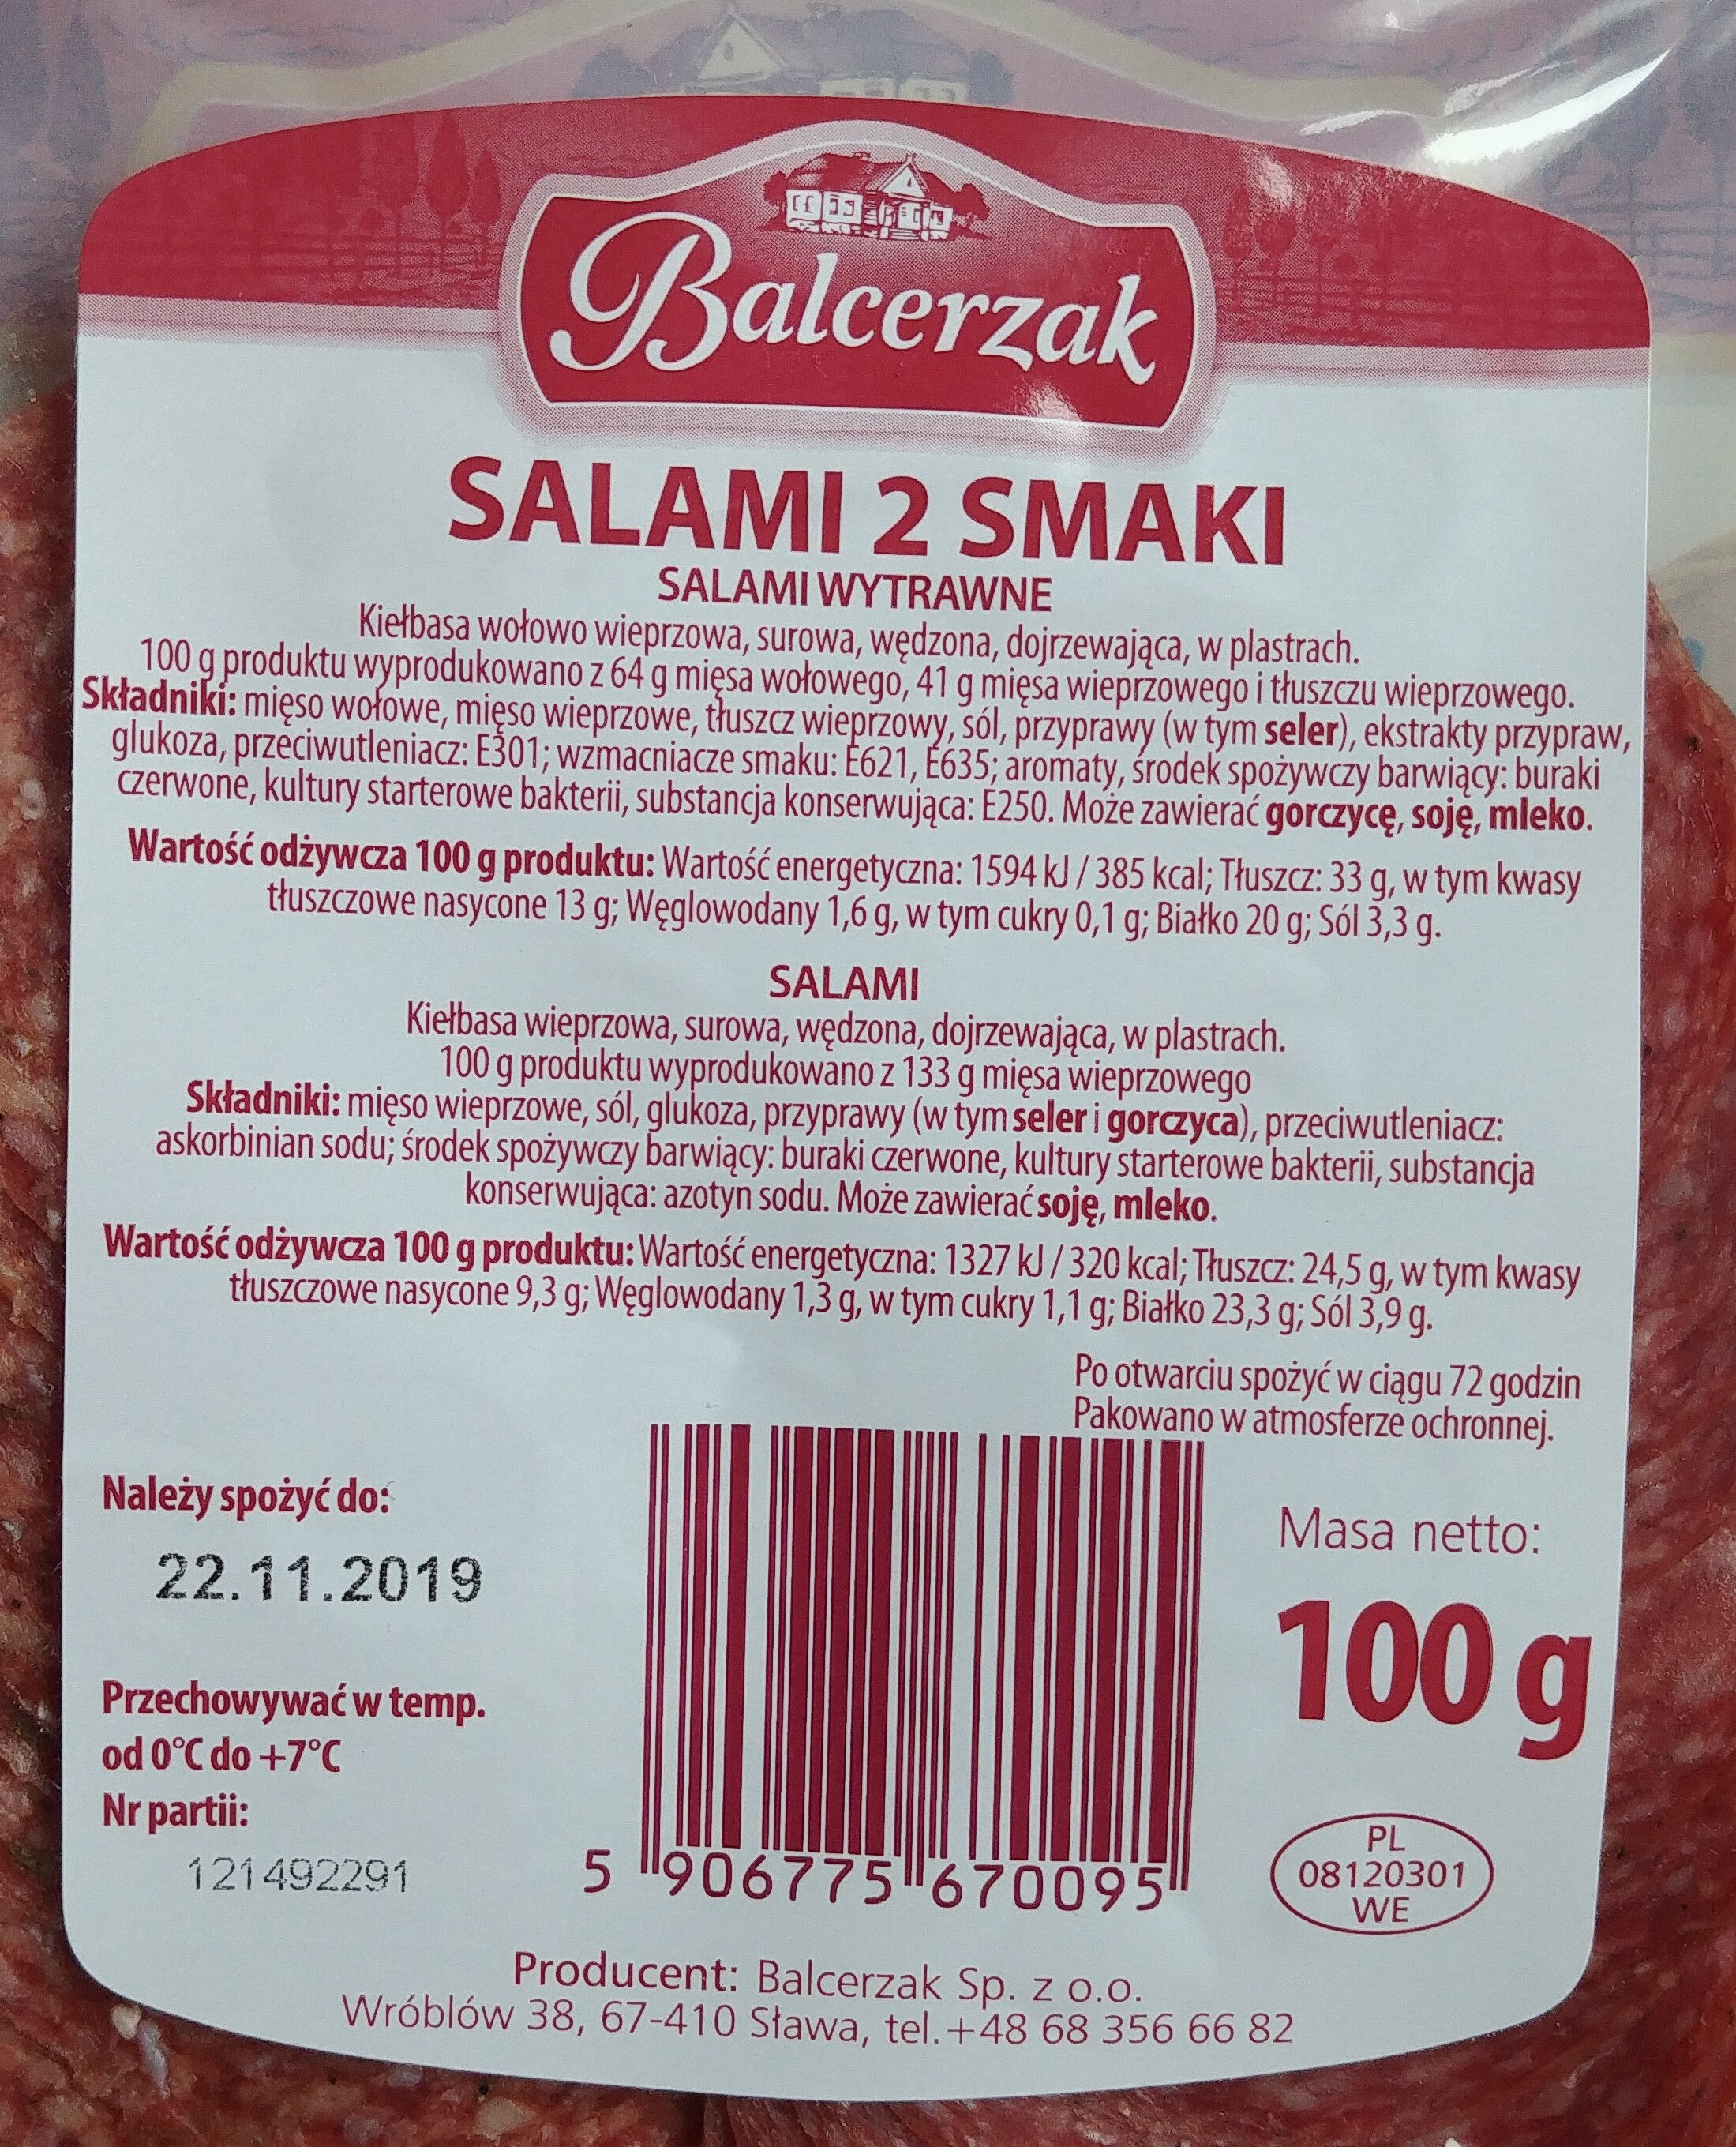 Salami 2 smaki. (Salami wytrawne, Salami) - Nutrition facts - pl